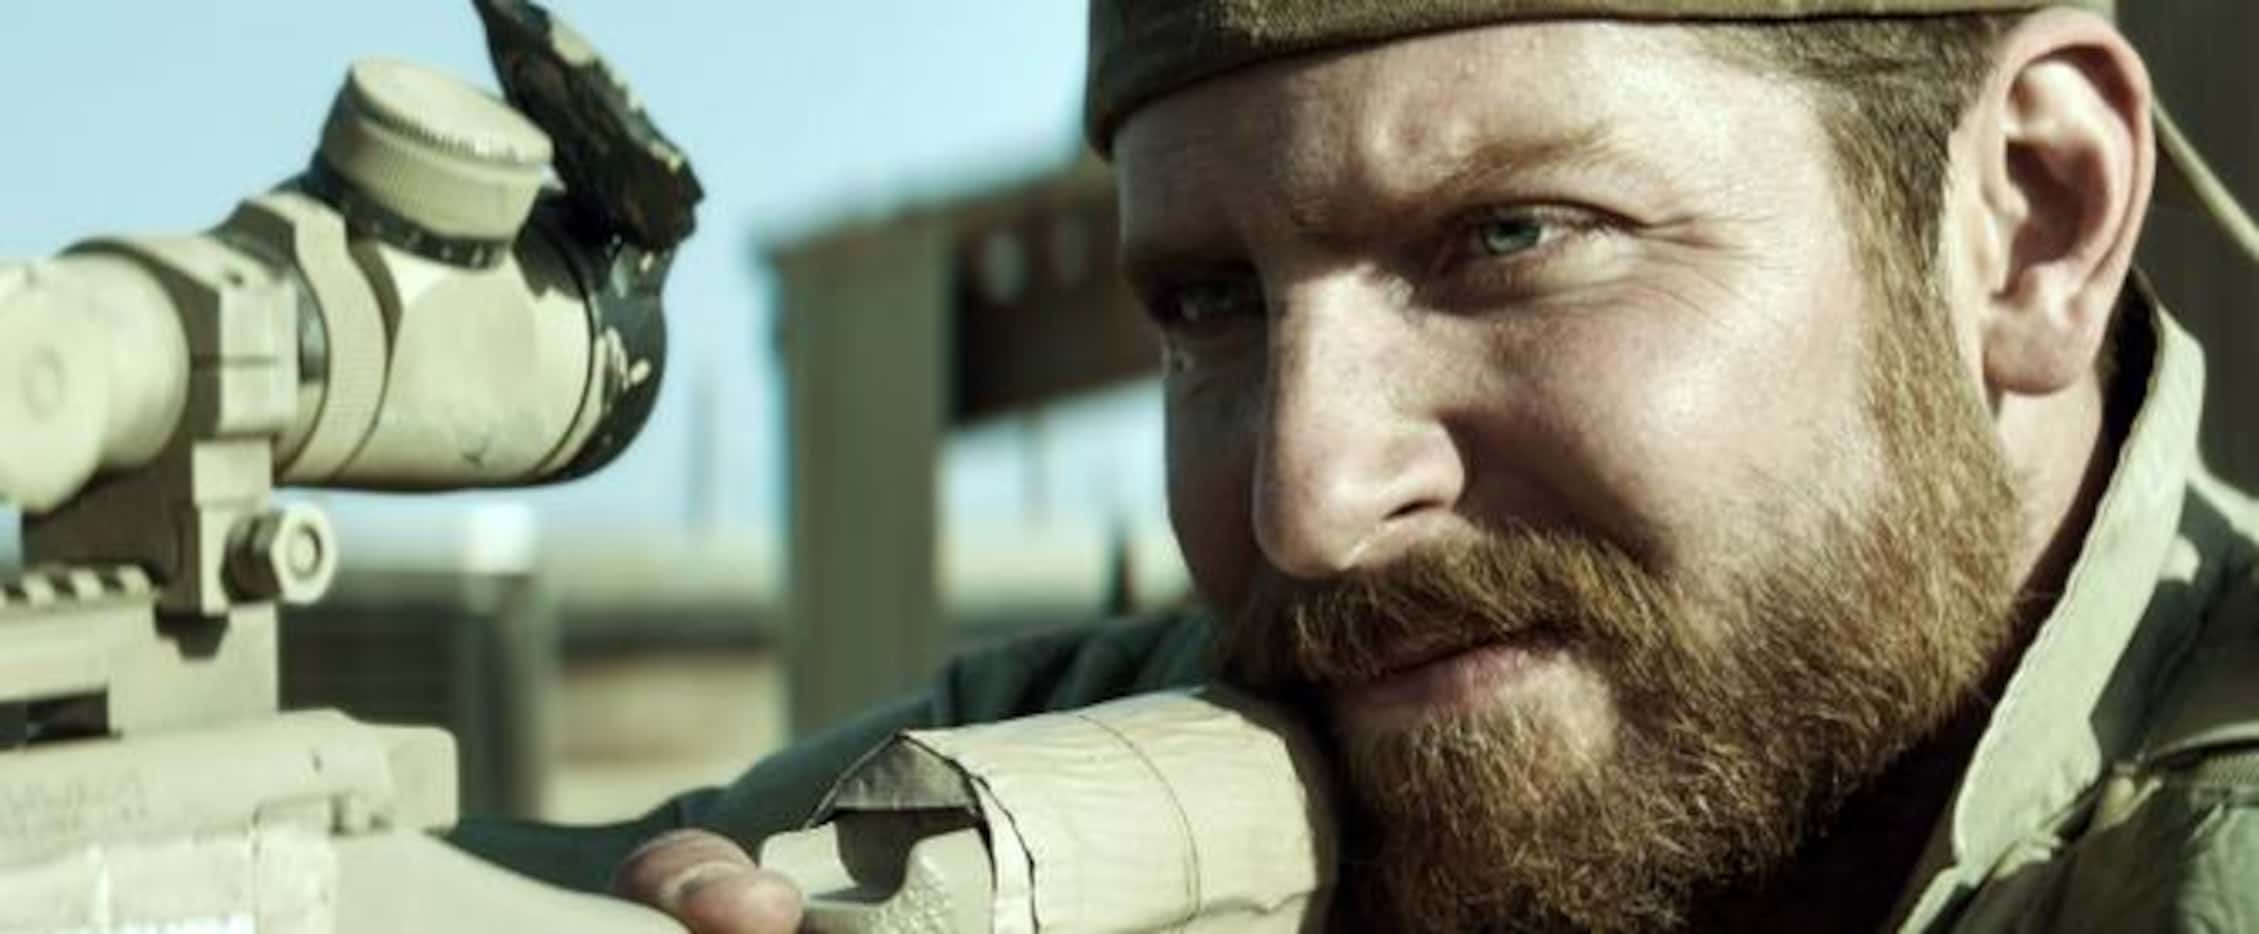 Bradley Cooper protagoniza “American Sniper” de Clint Eastwood. (AP/WARNER BROS.)
